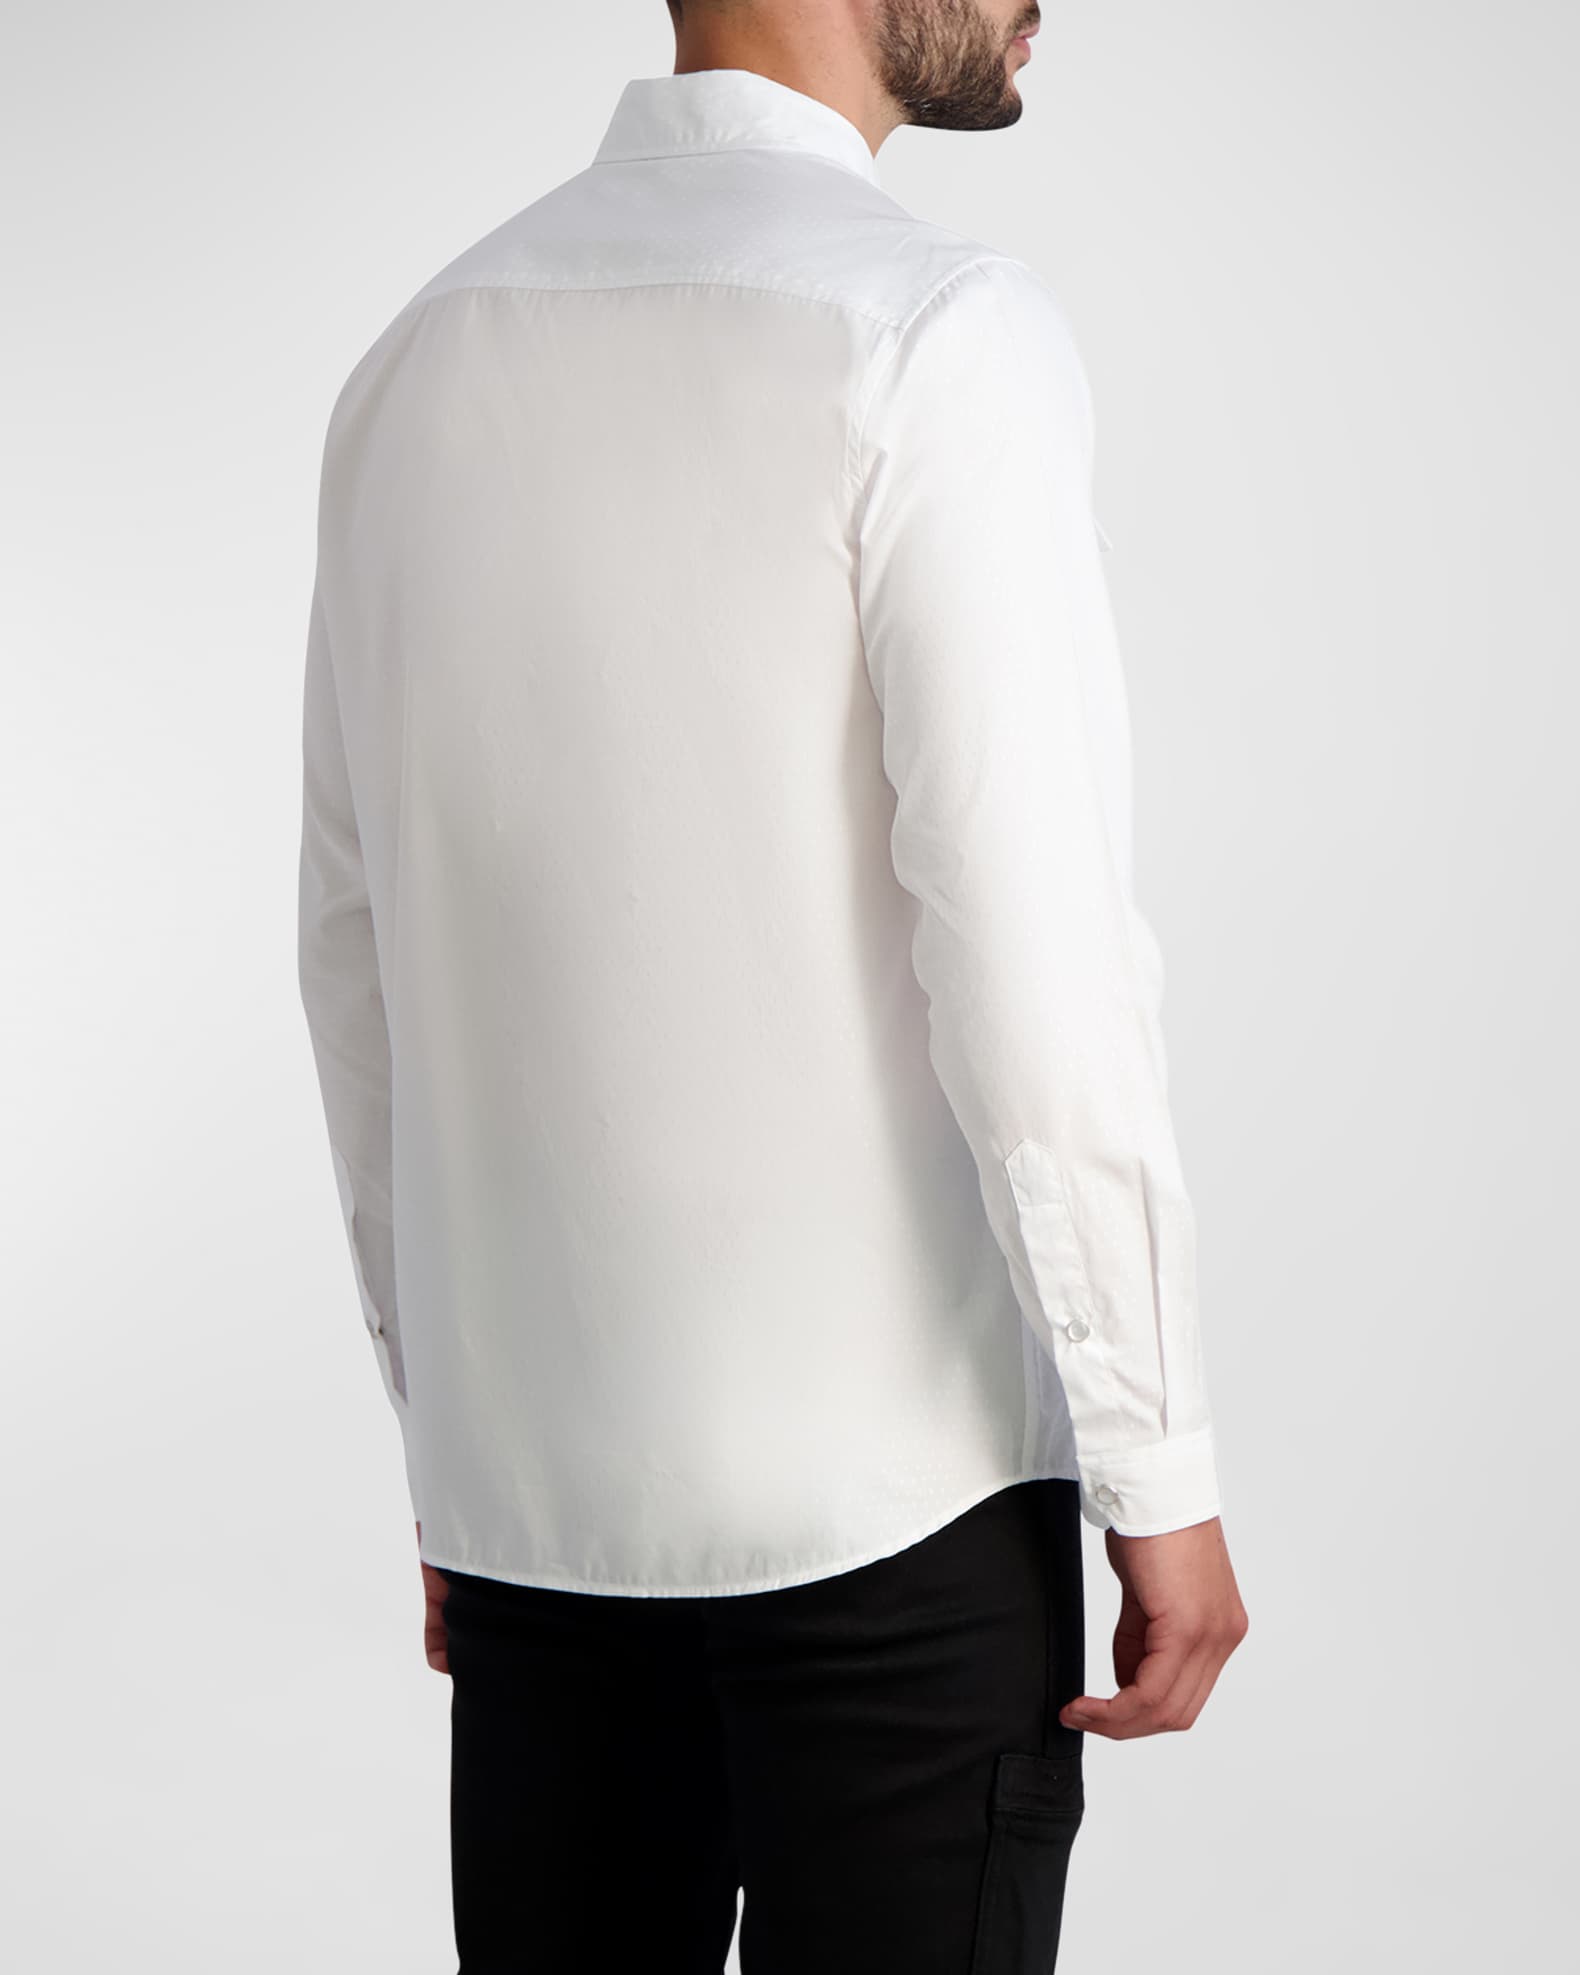 Karl Lagerfeld Paris Men S Jacquard Chest Pocket Sport Shirt Neiman